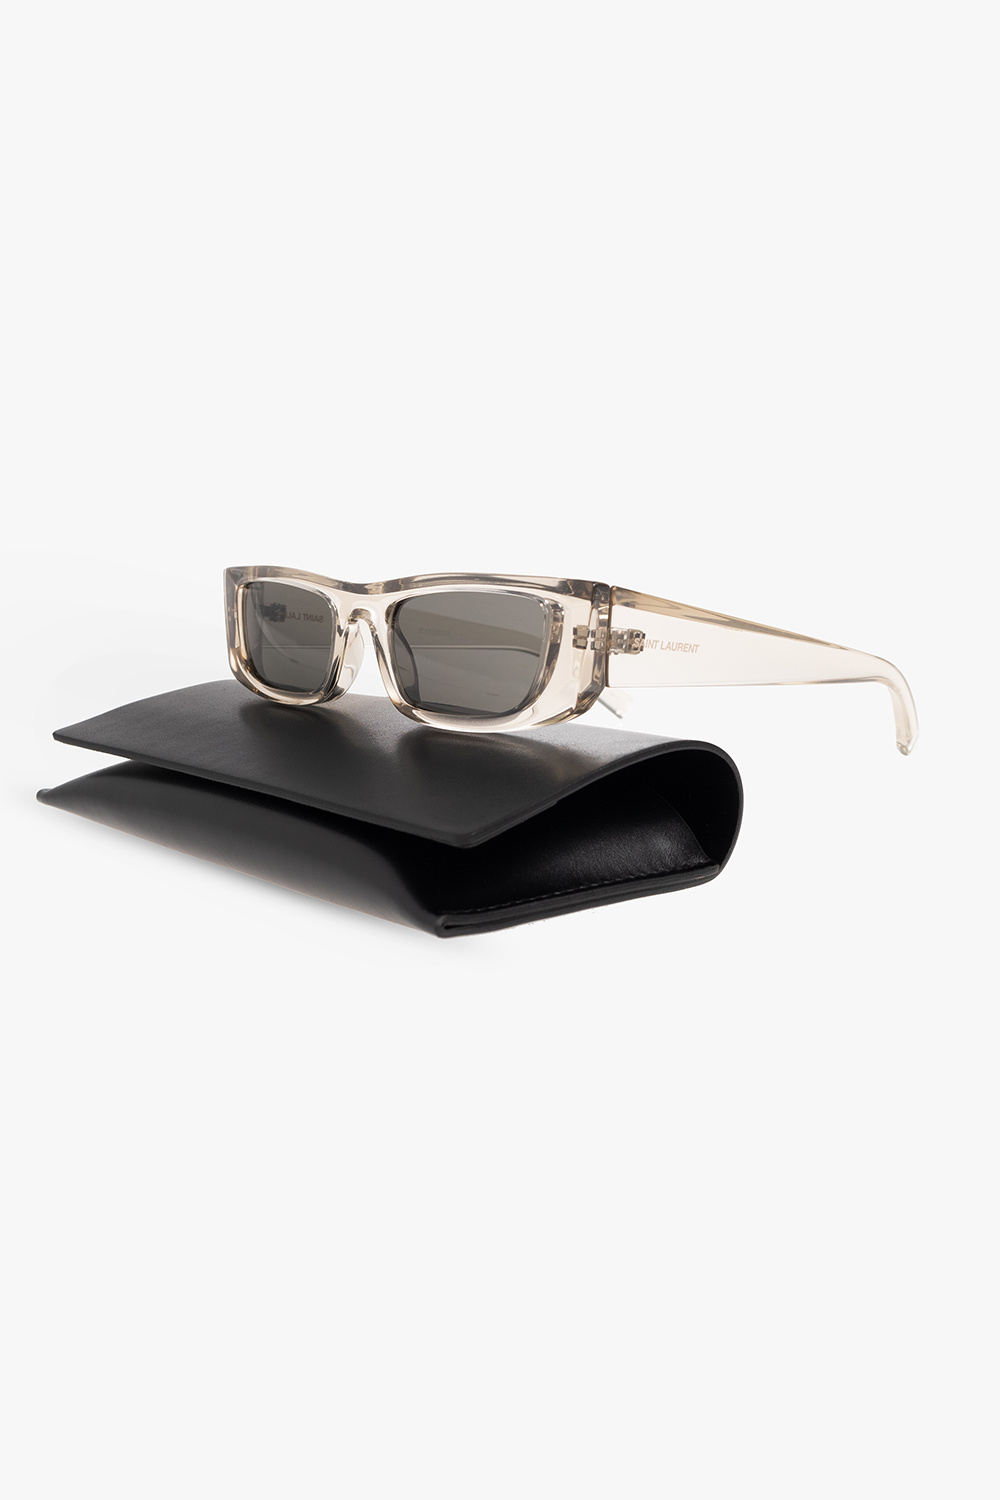 Saint Laurent ‘SL 553’ sunglasses